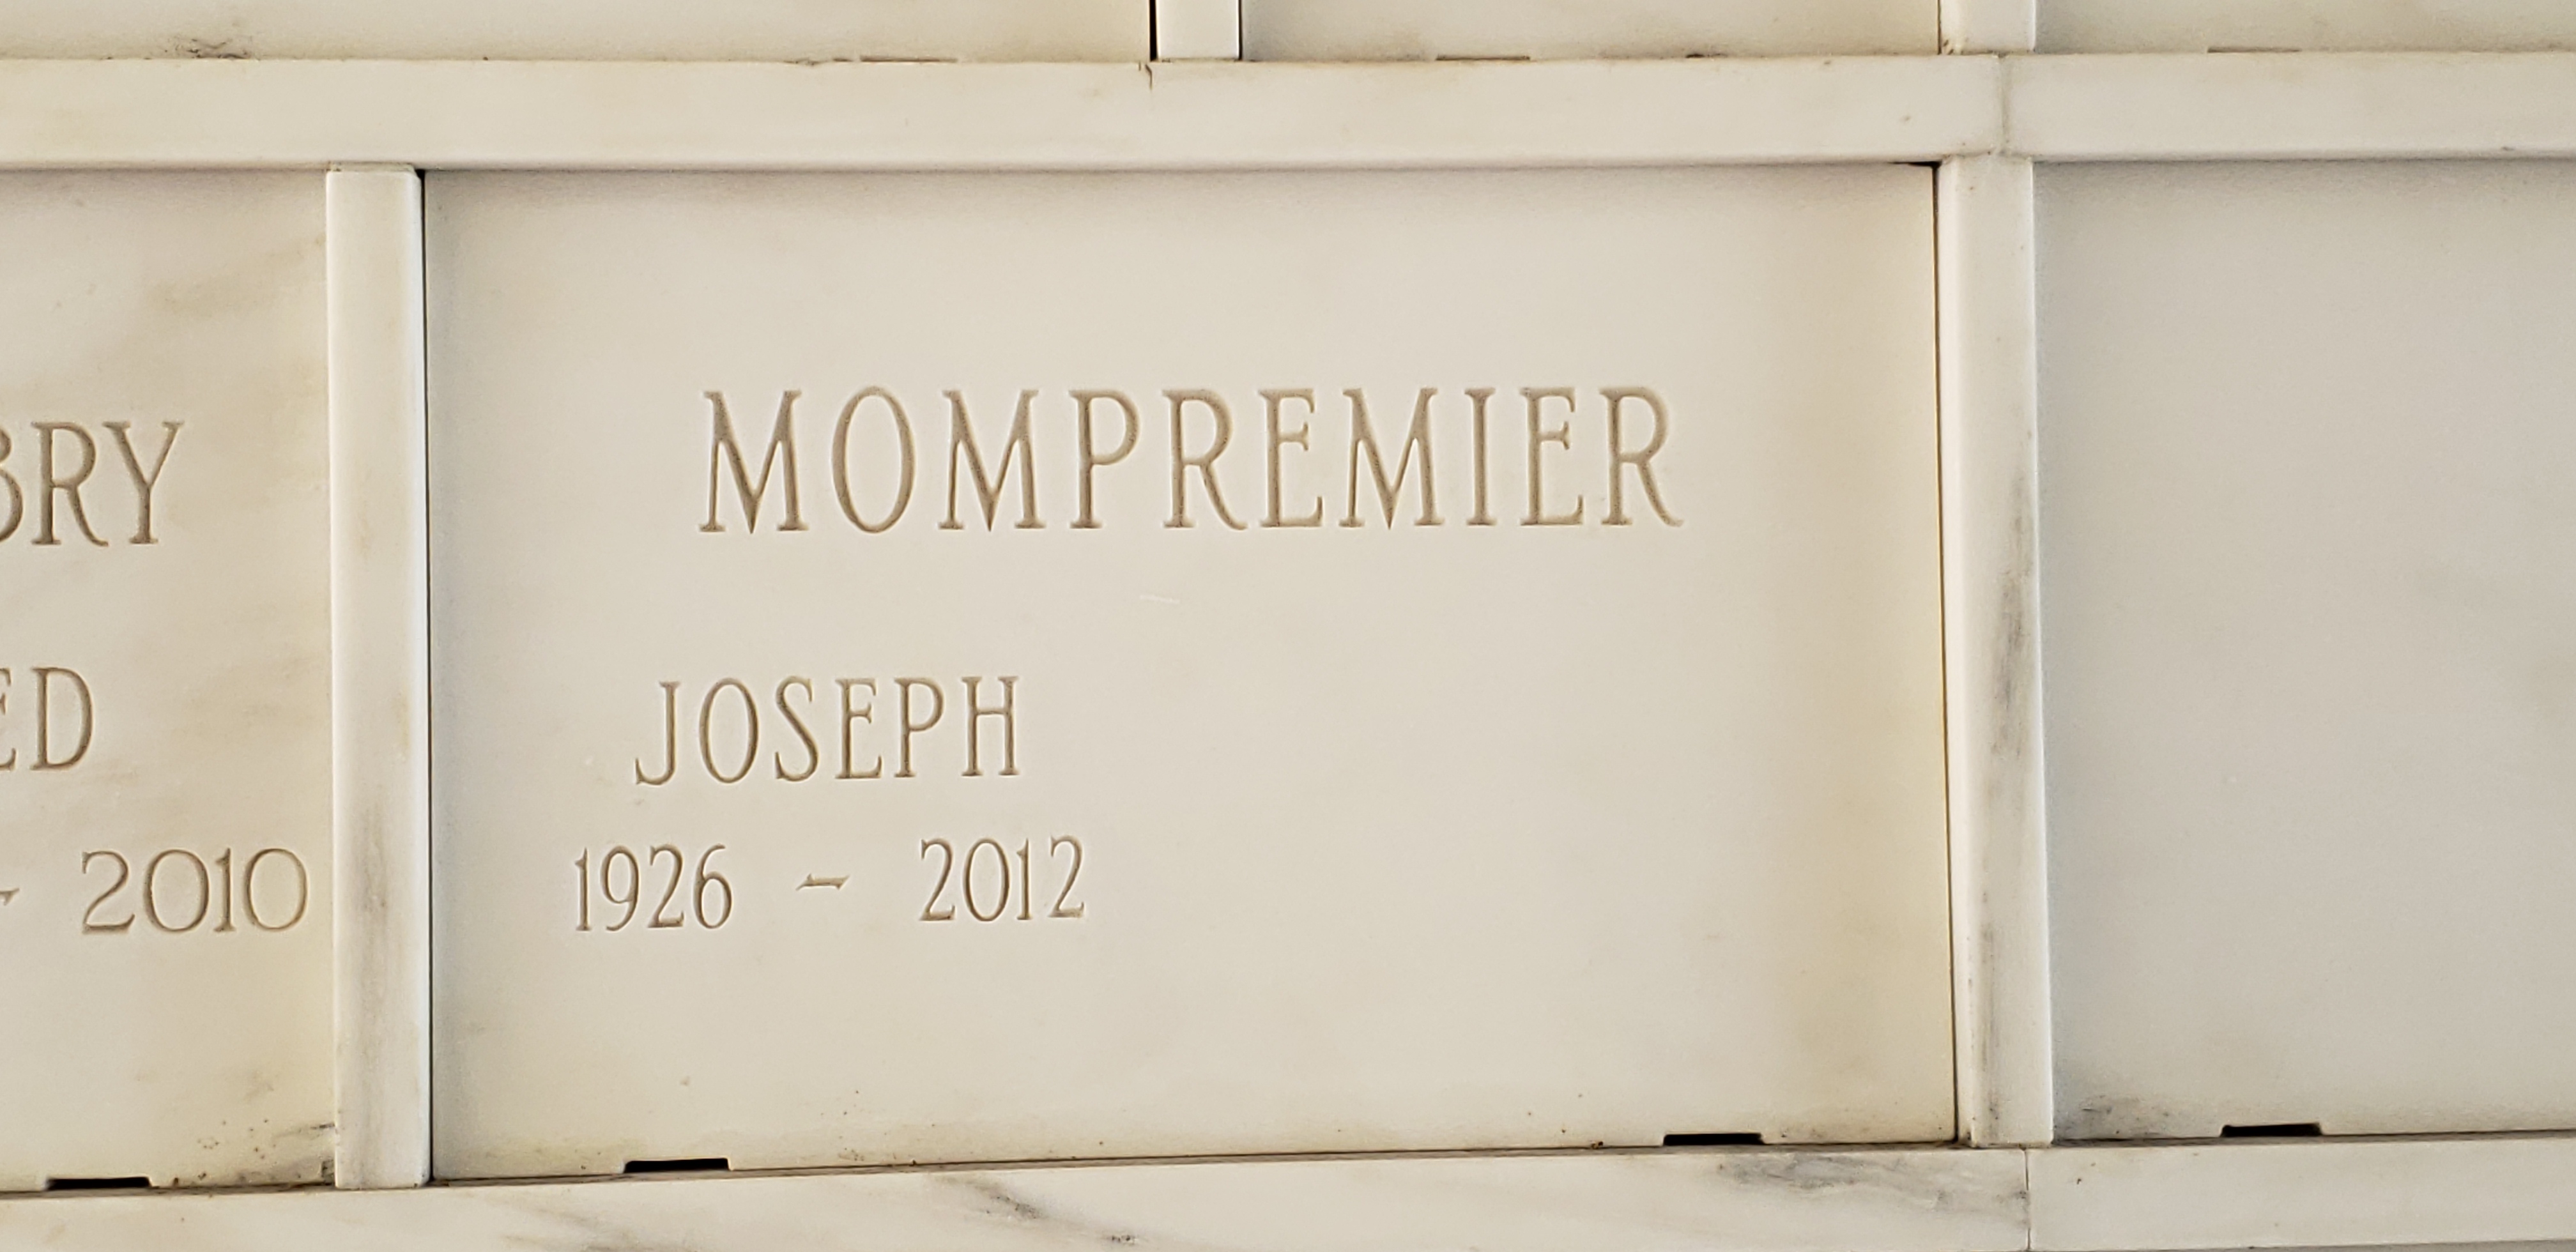 Joseph Mompremier